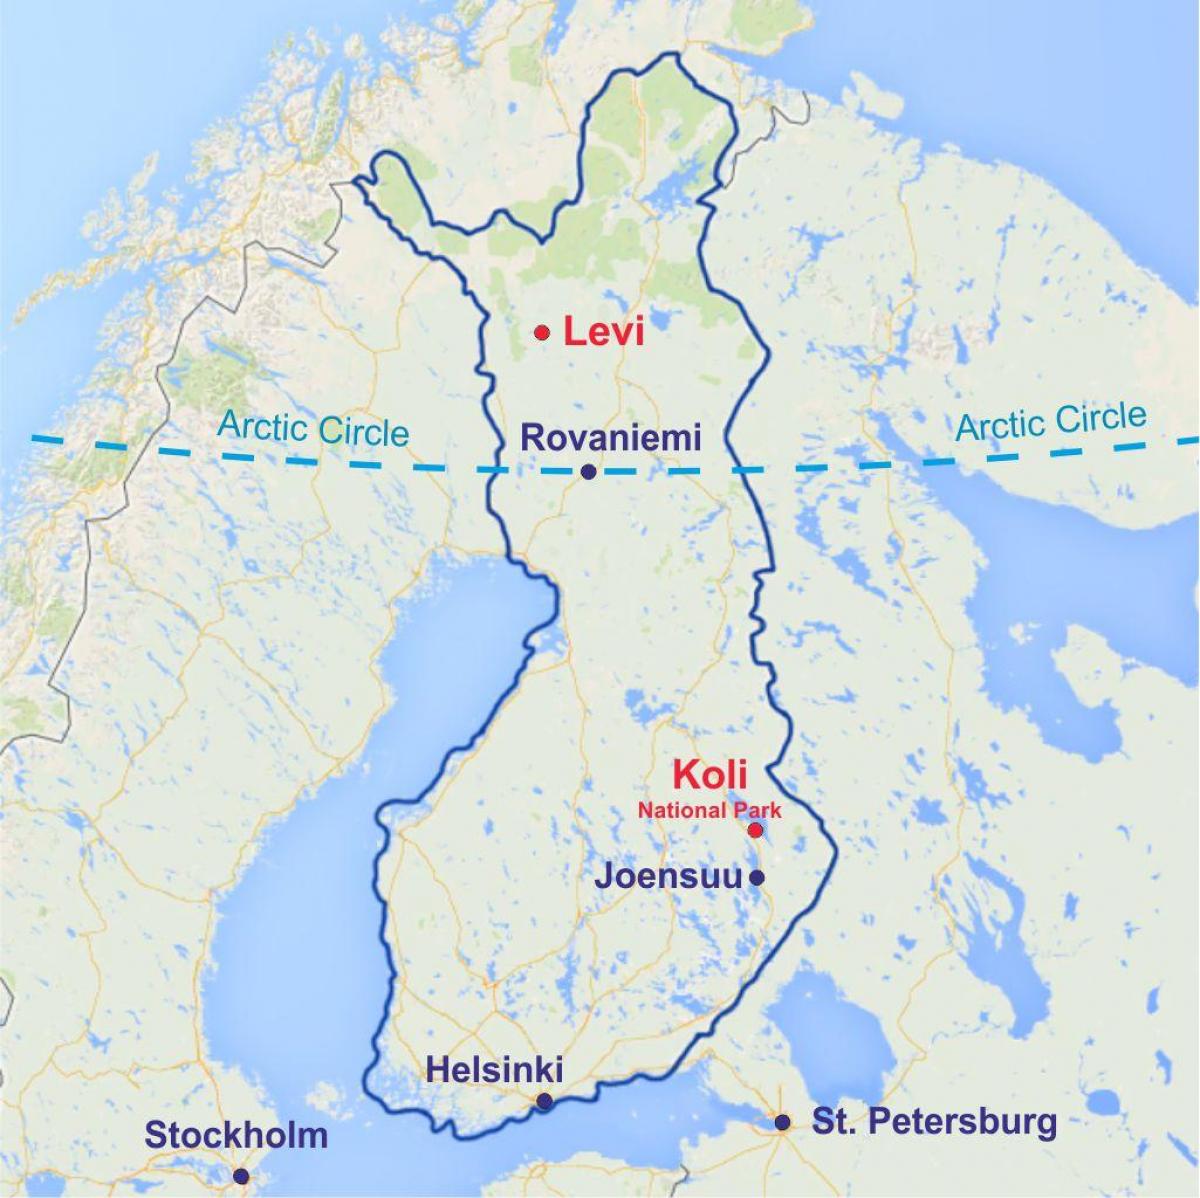 Finland levi kart